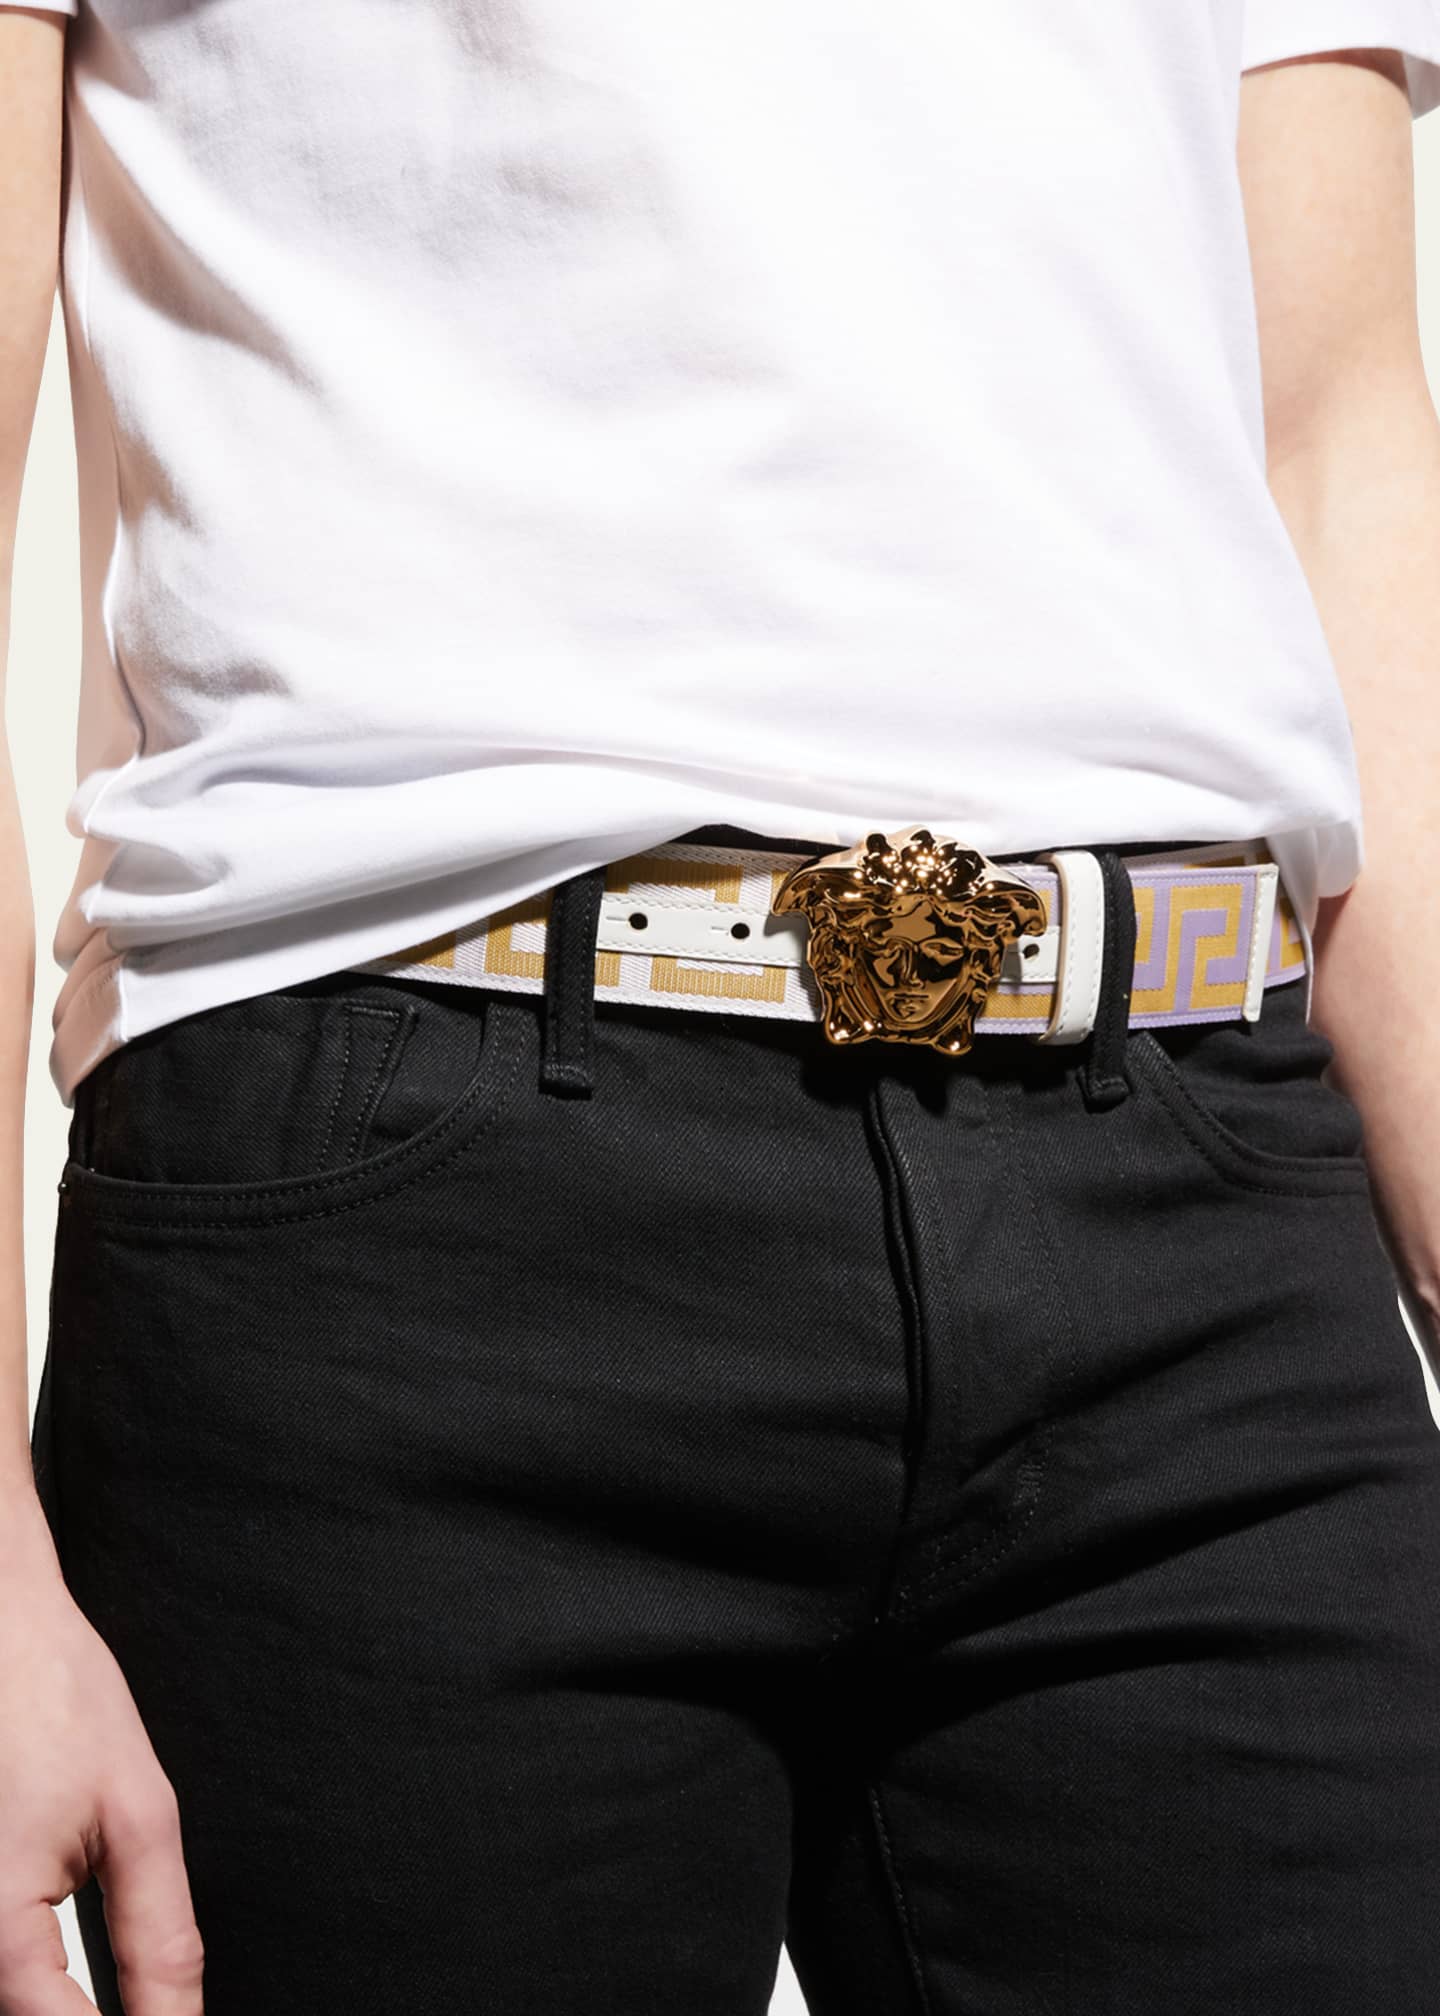 Versace Men's Medusa Head Belt in Versace Gold, Size M | End Clothing